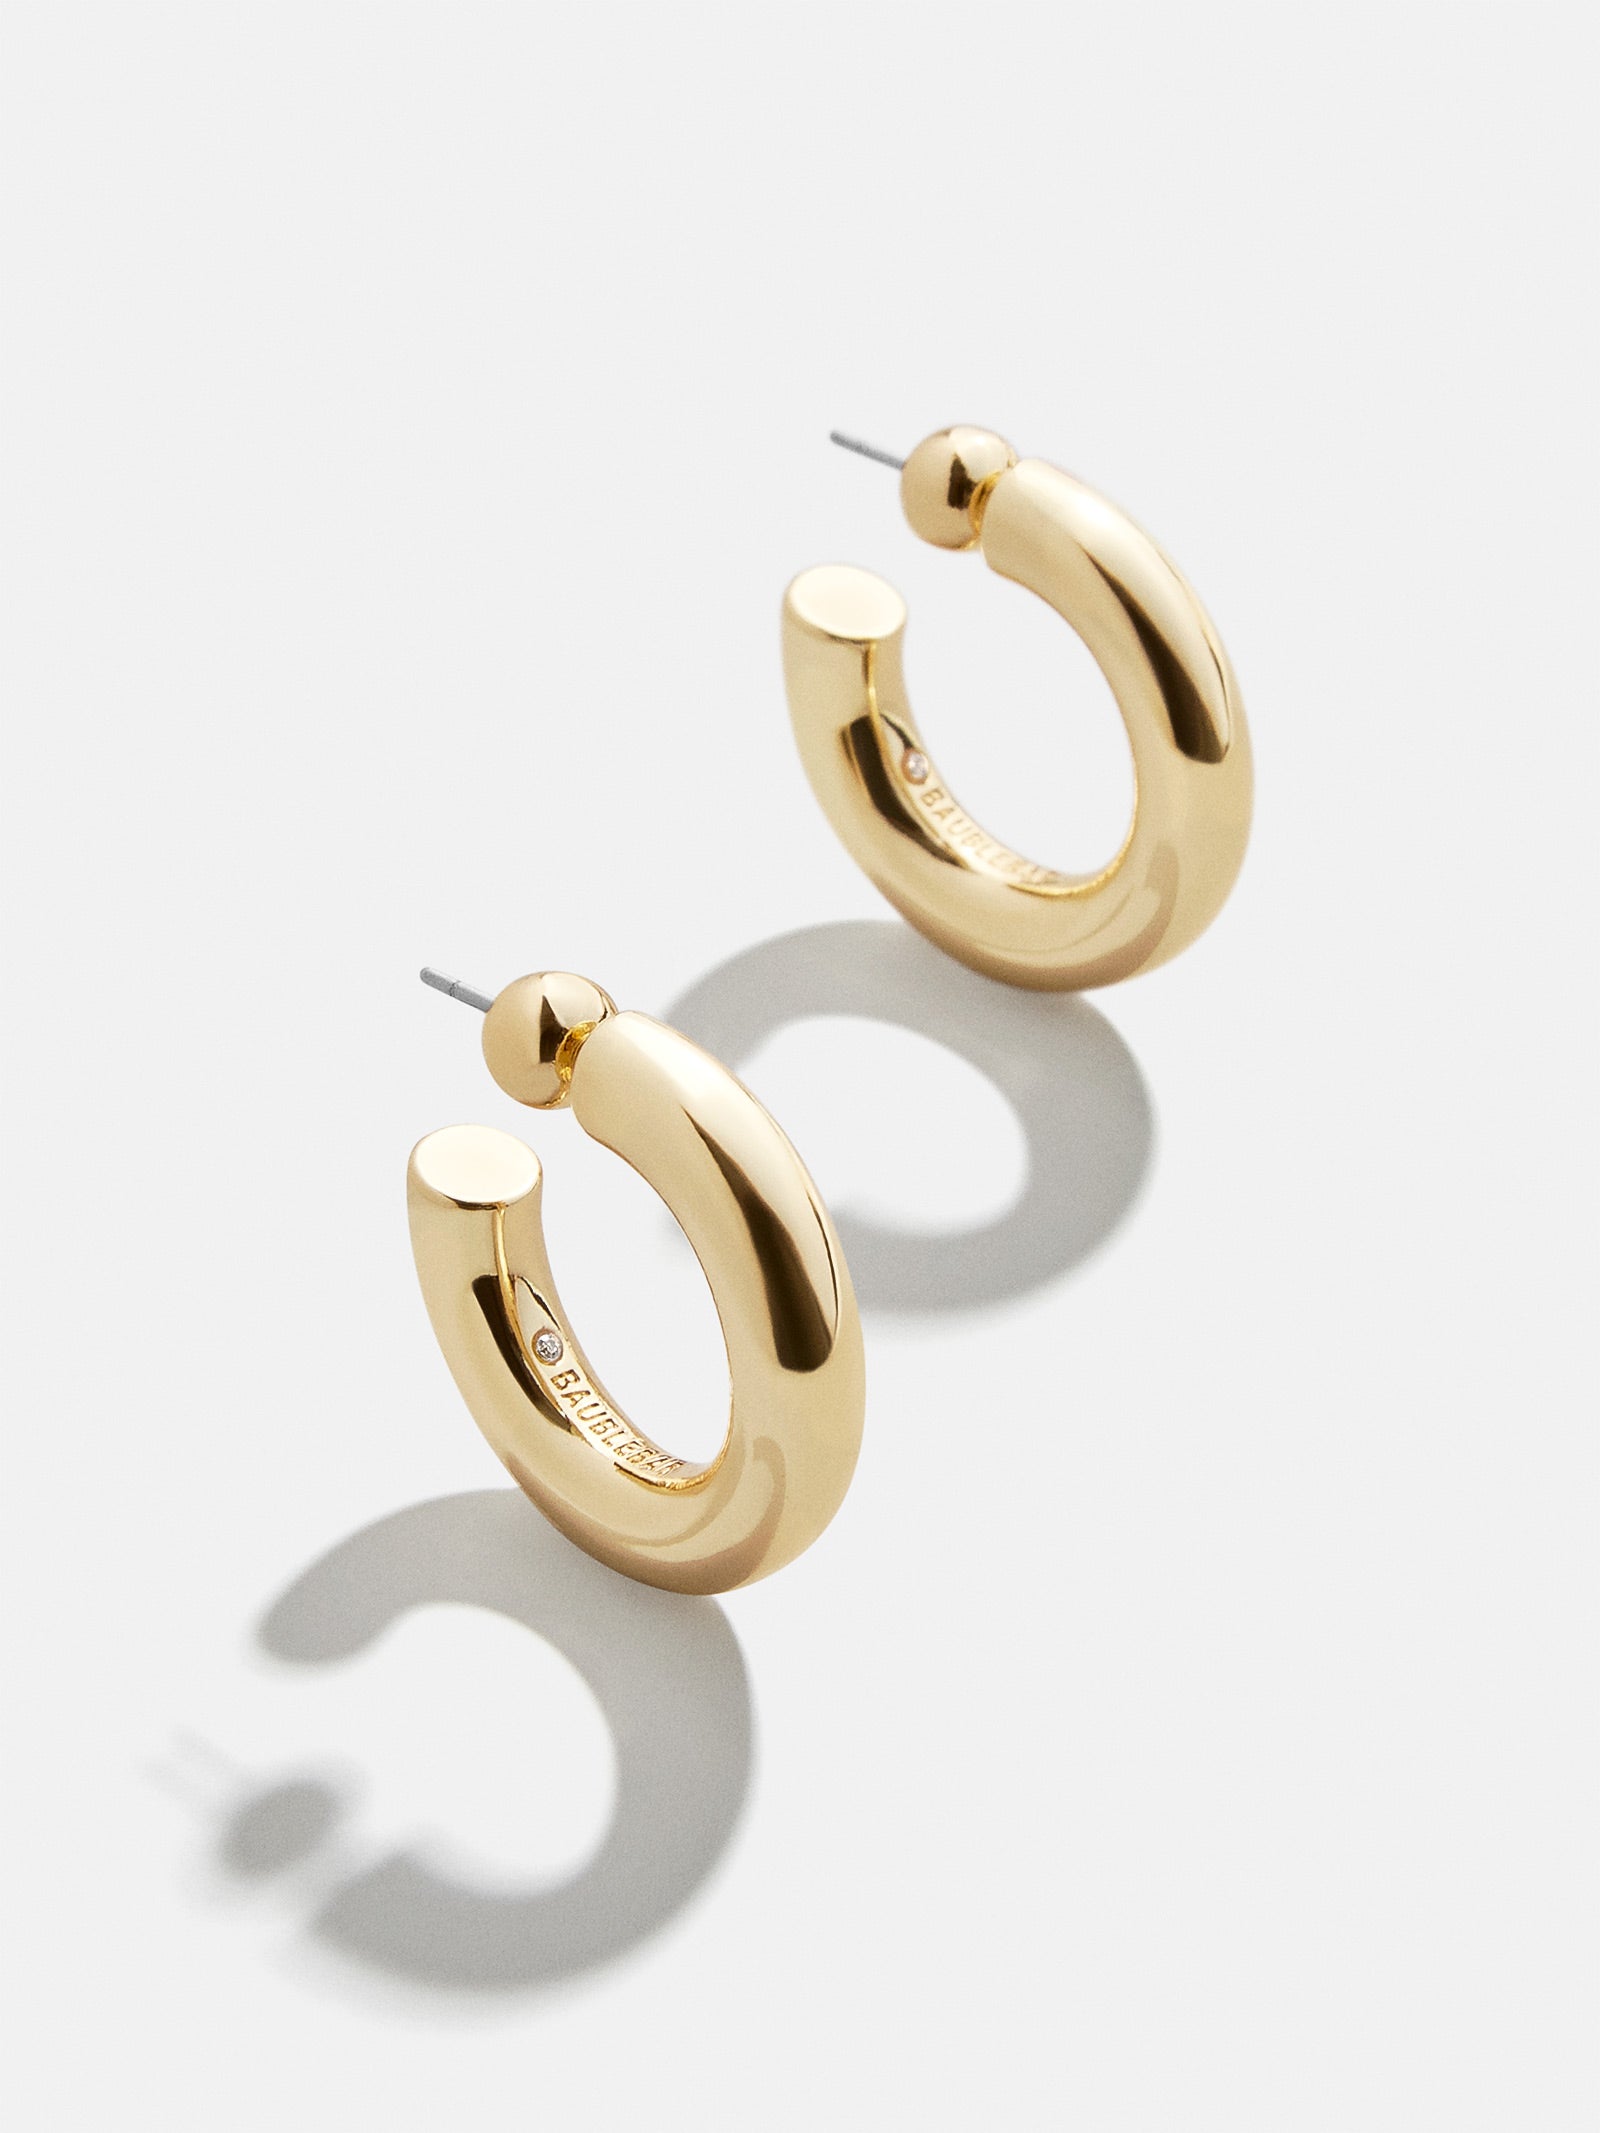 These $14  earrings look just like the $820 Bottega Veneta